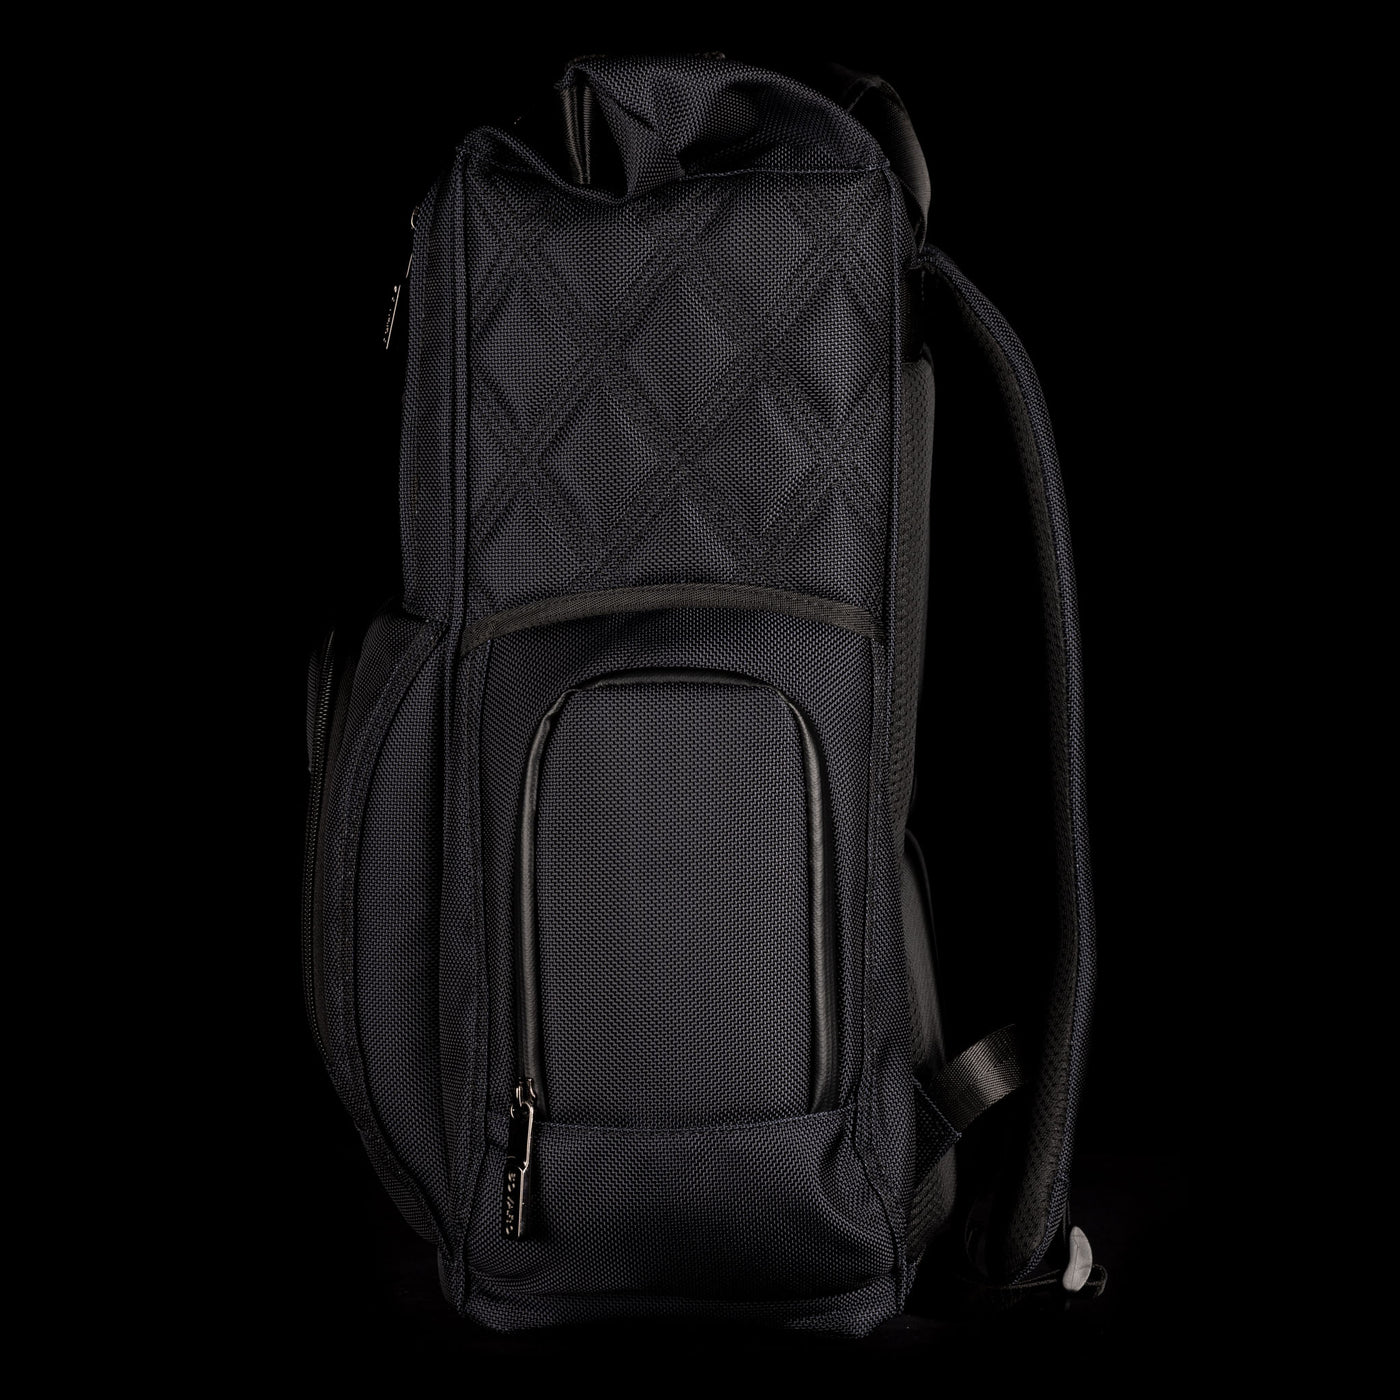 LENNOX - Backpack Cooler